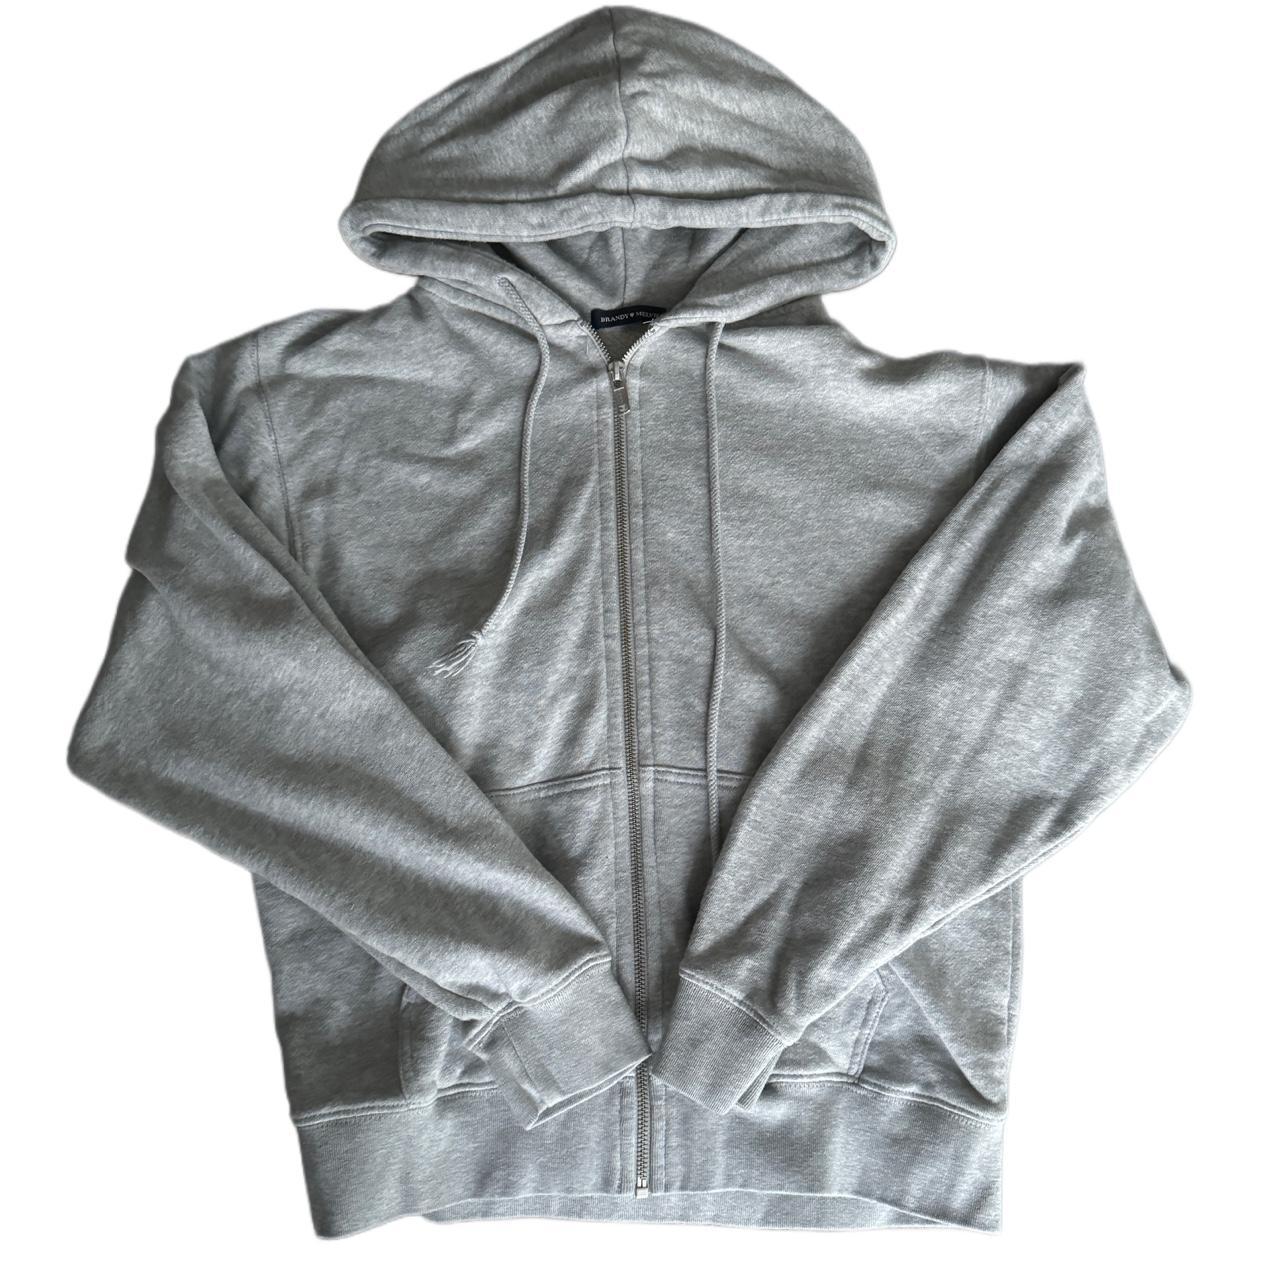 brandy melville grey christy zipup hoodie (also - Depop